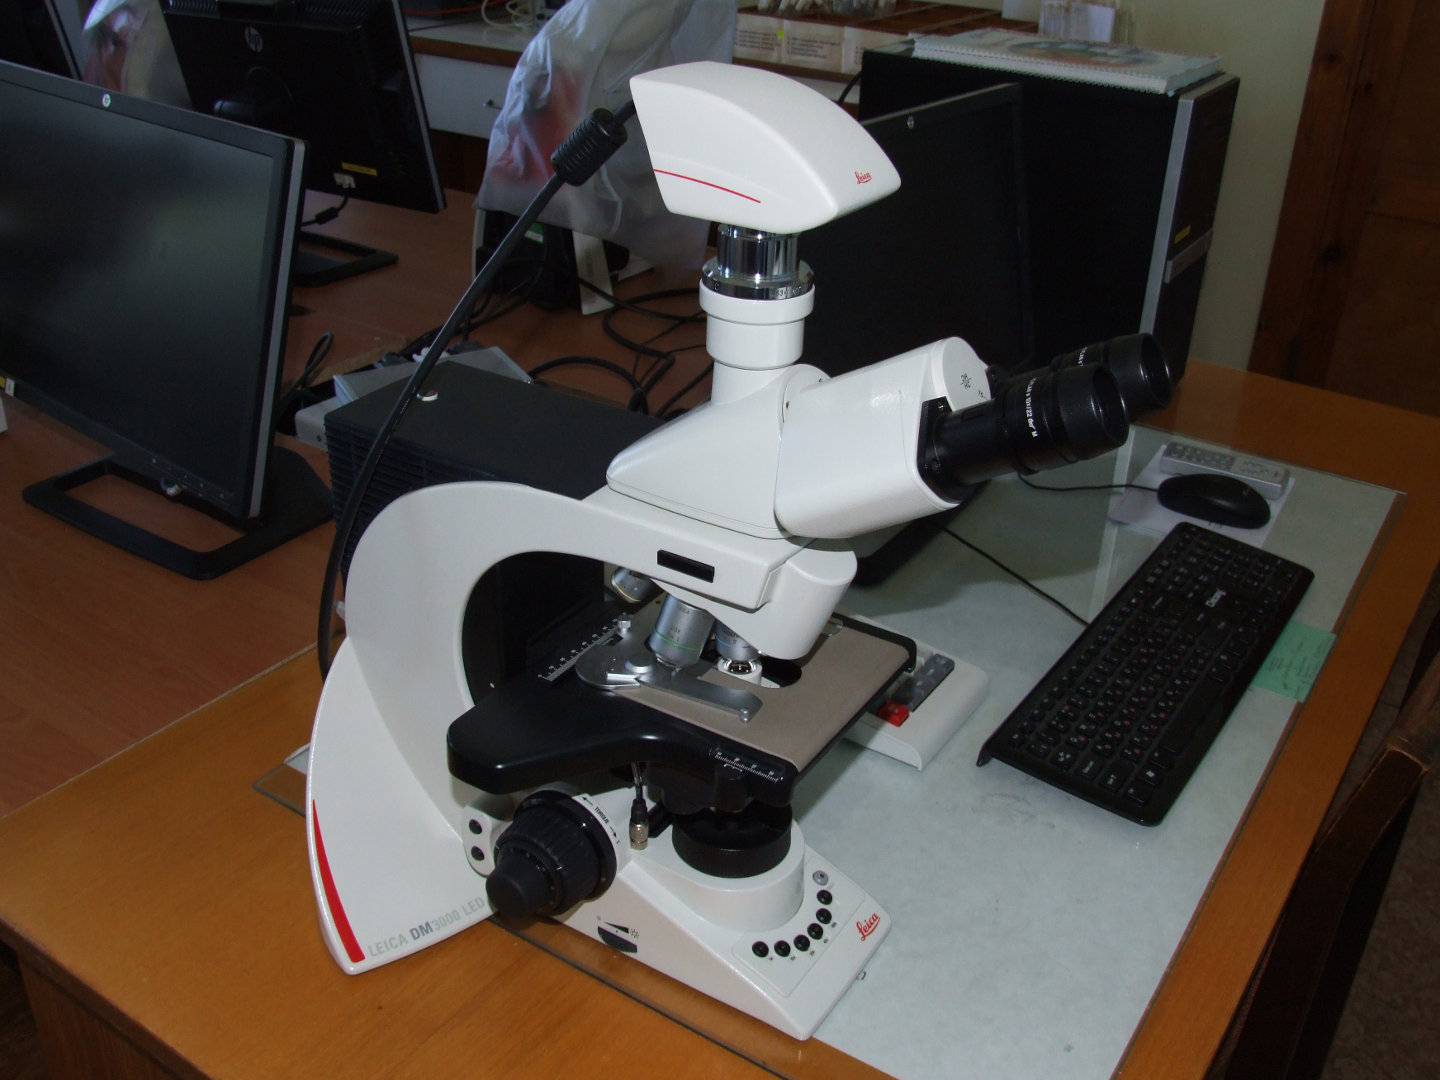 The Leica DM500 microscopes, Leica DFC290 Microscope Camera | UseScience